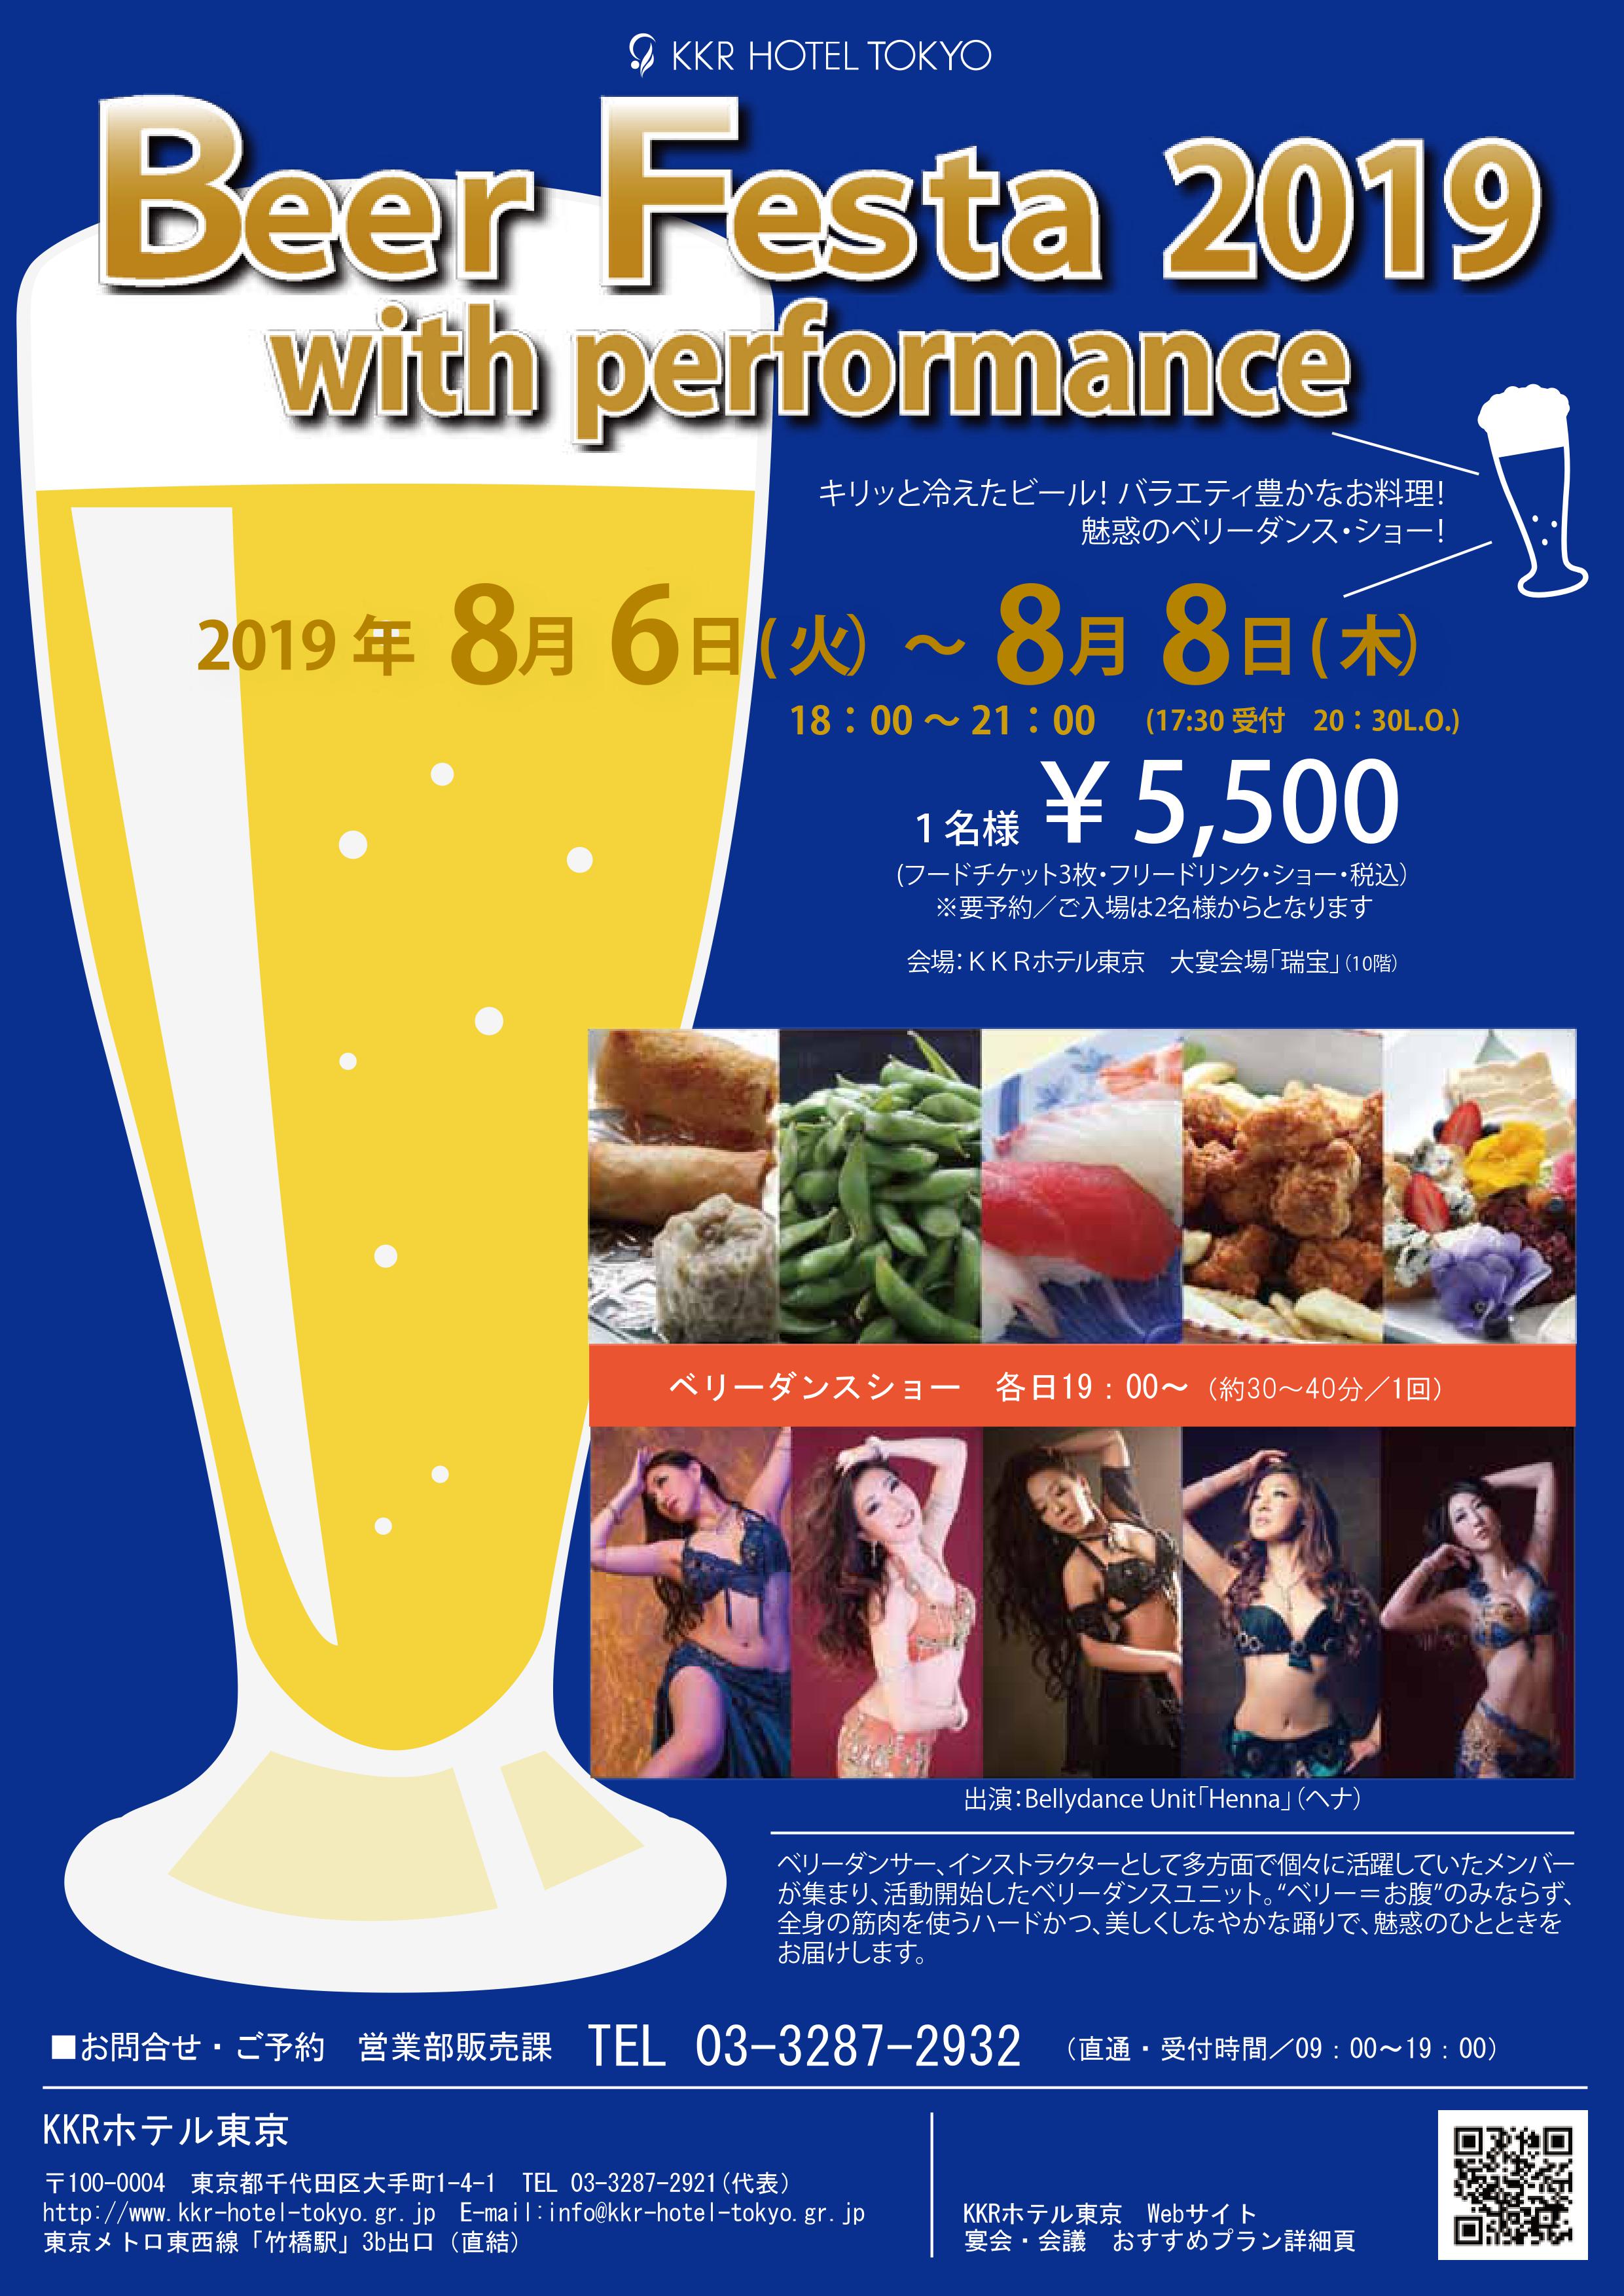  【KKR HOTEL TOKYO】Beer Festa2019 with performance 